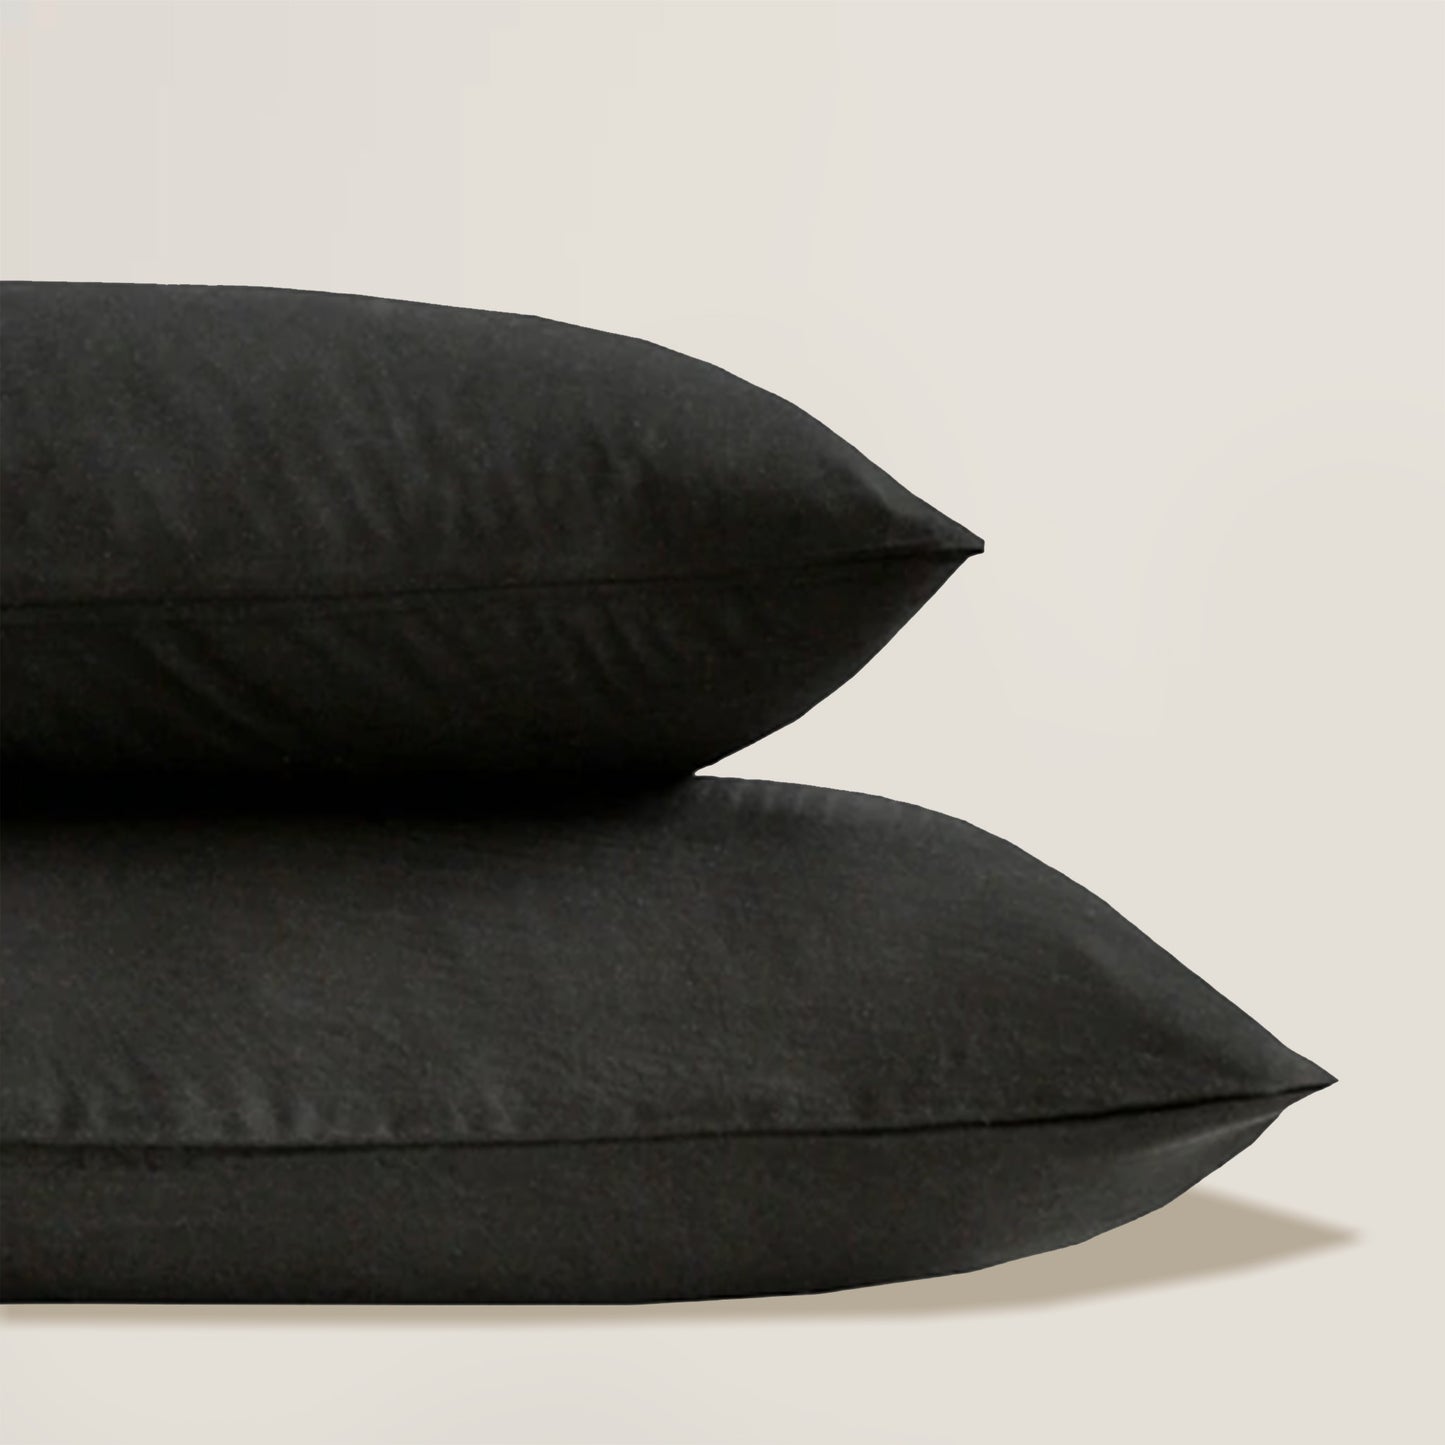 Black Pillowcases Set